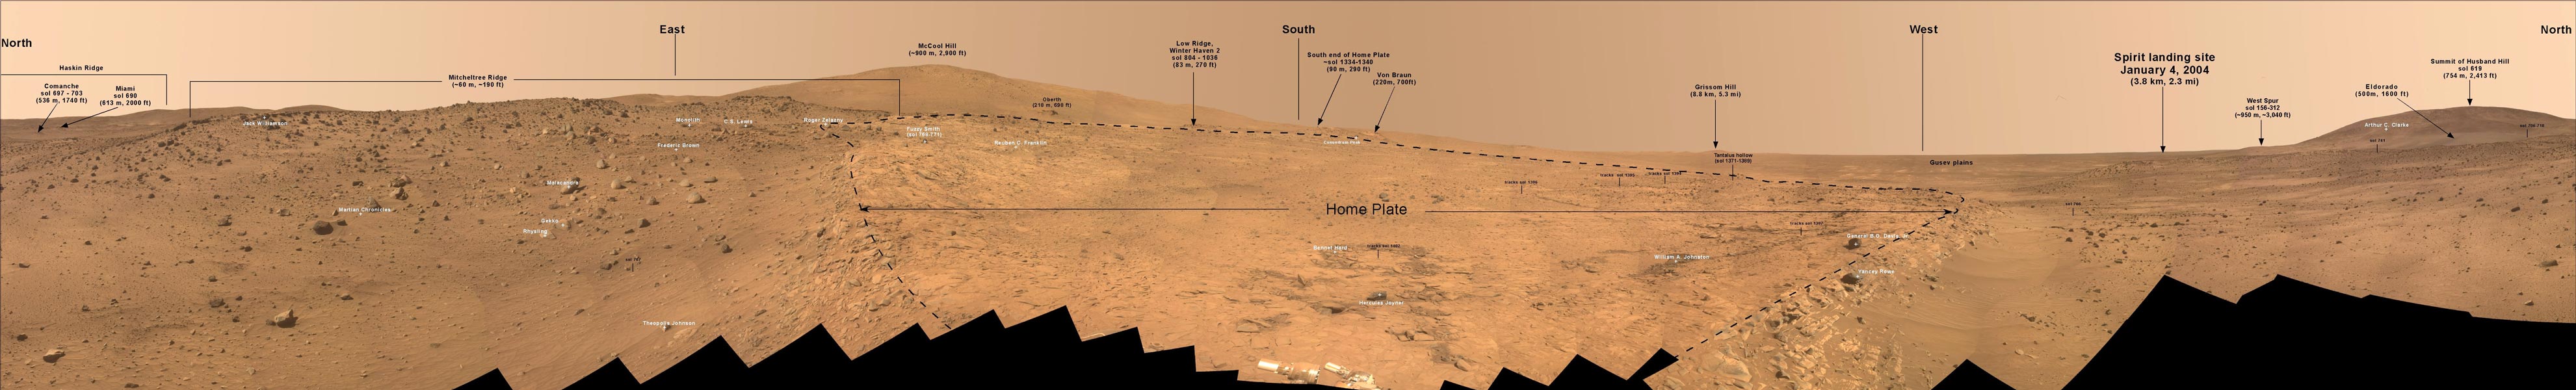 Panorámica de Bonestell desde Mars